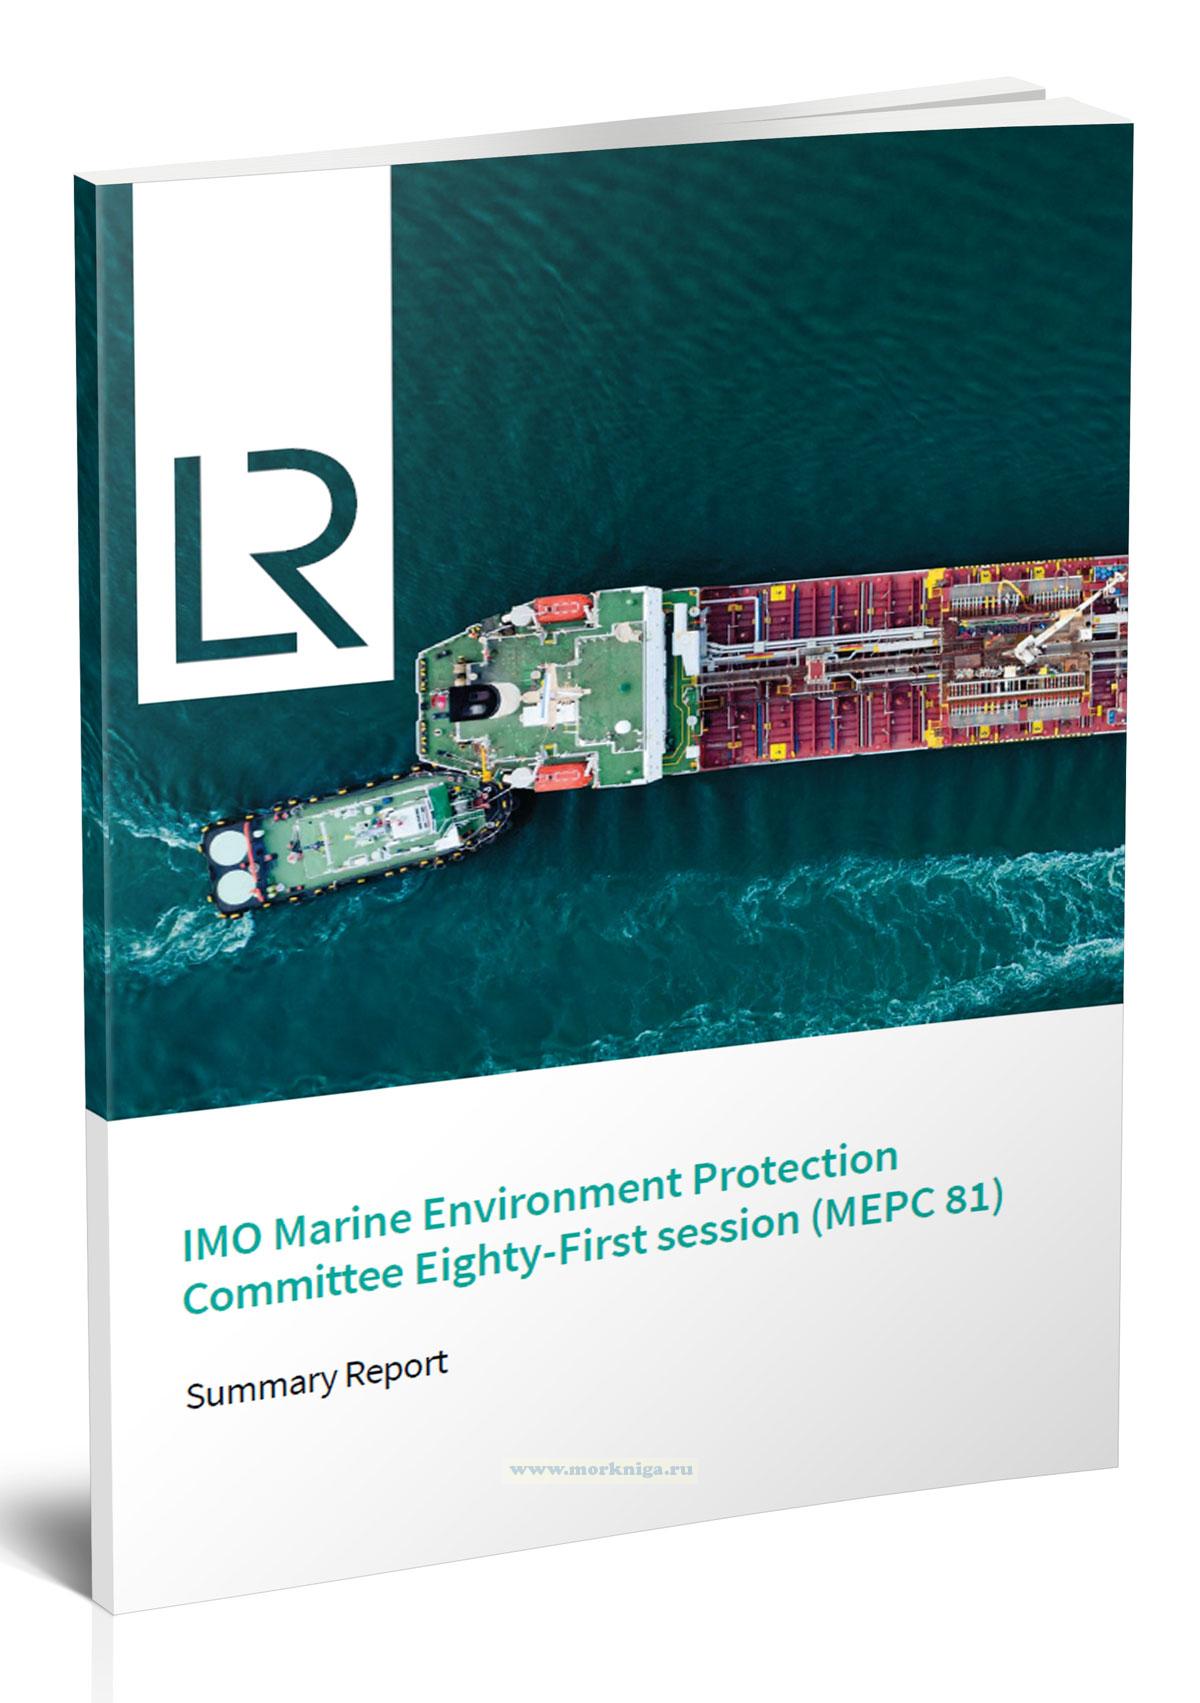 IMO Marine Environment Protection Committee Eighty-First session (MEPC 81)/Комитет ИМО по защите морской среды, восемьдесят первая сессия (MEPC 81)